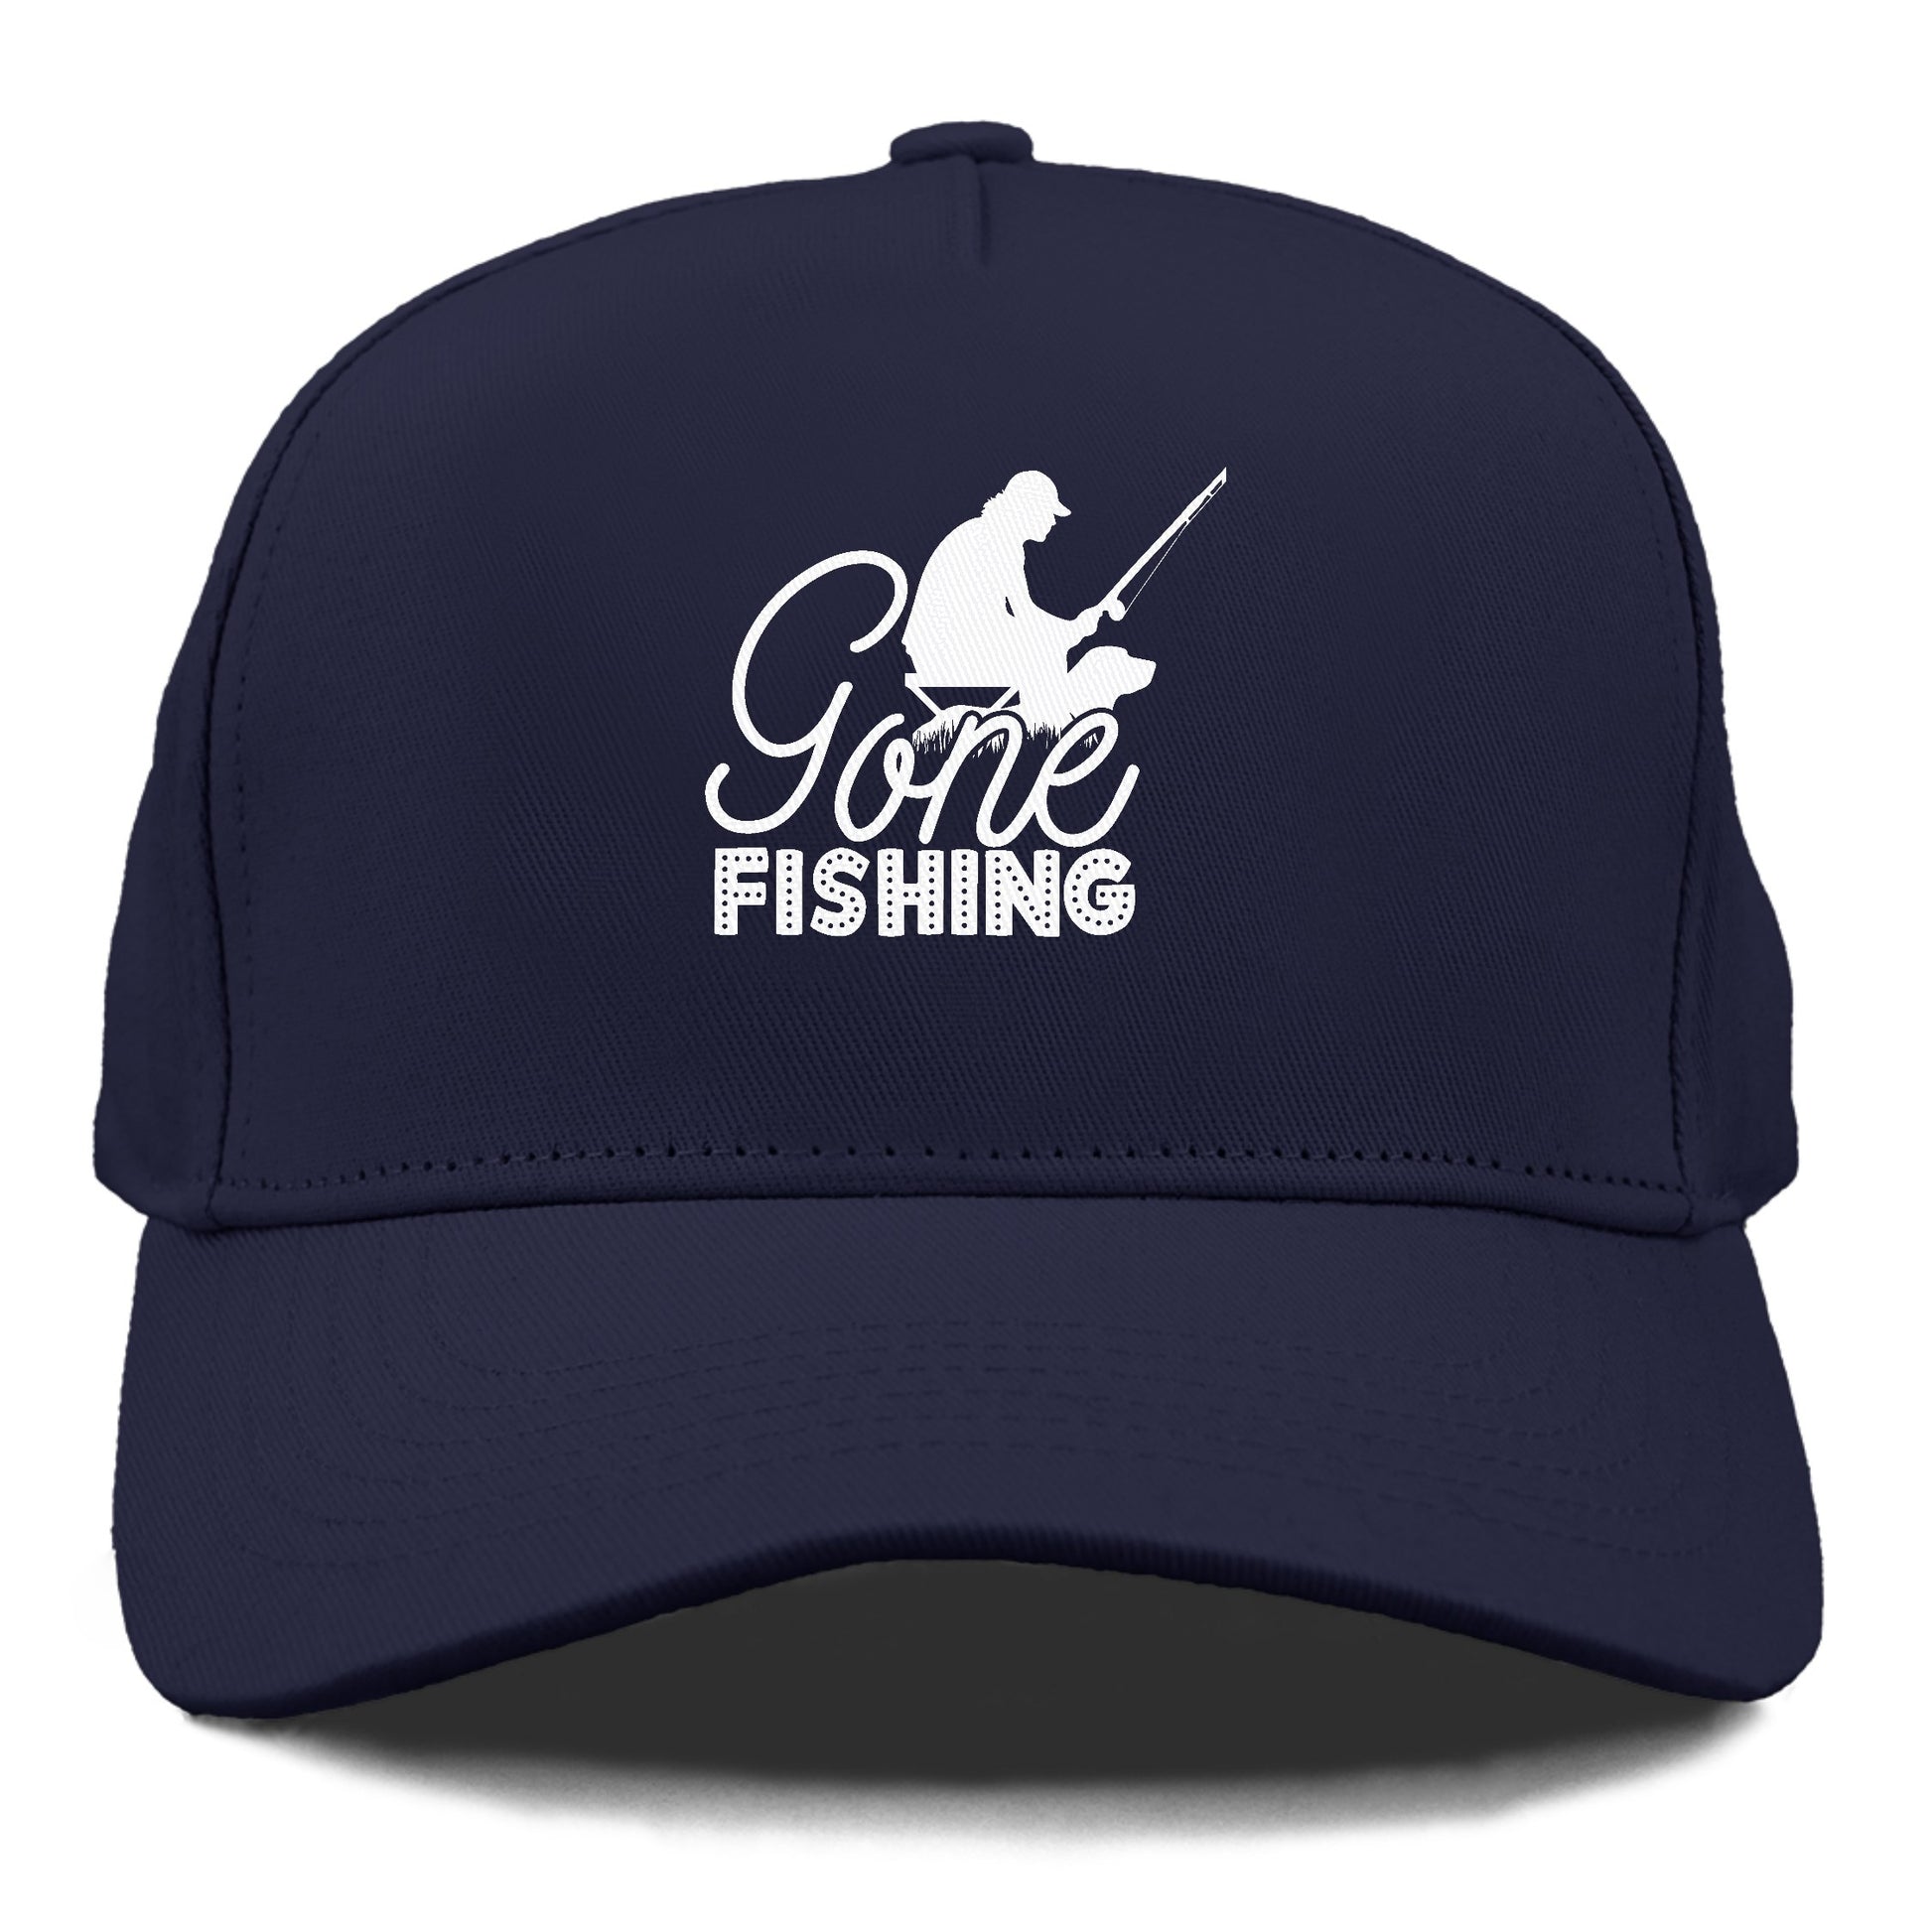 gone fishing' Baseball Cap